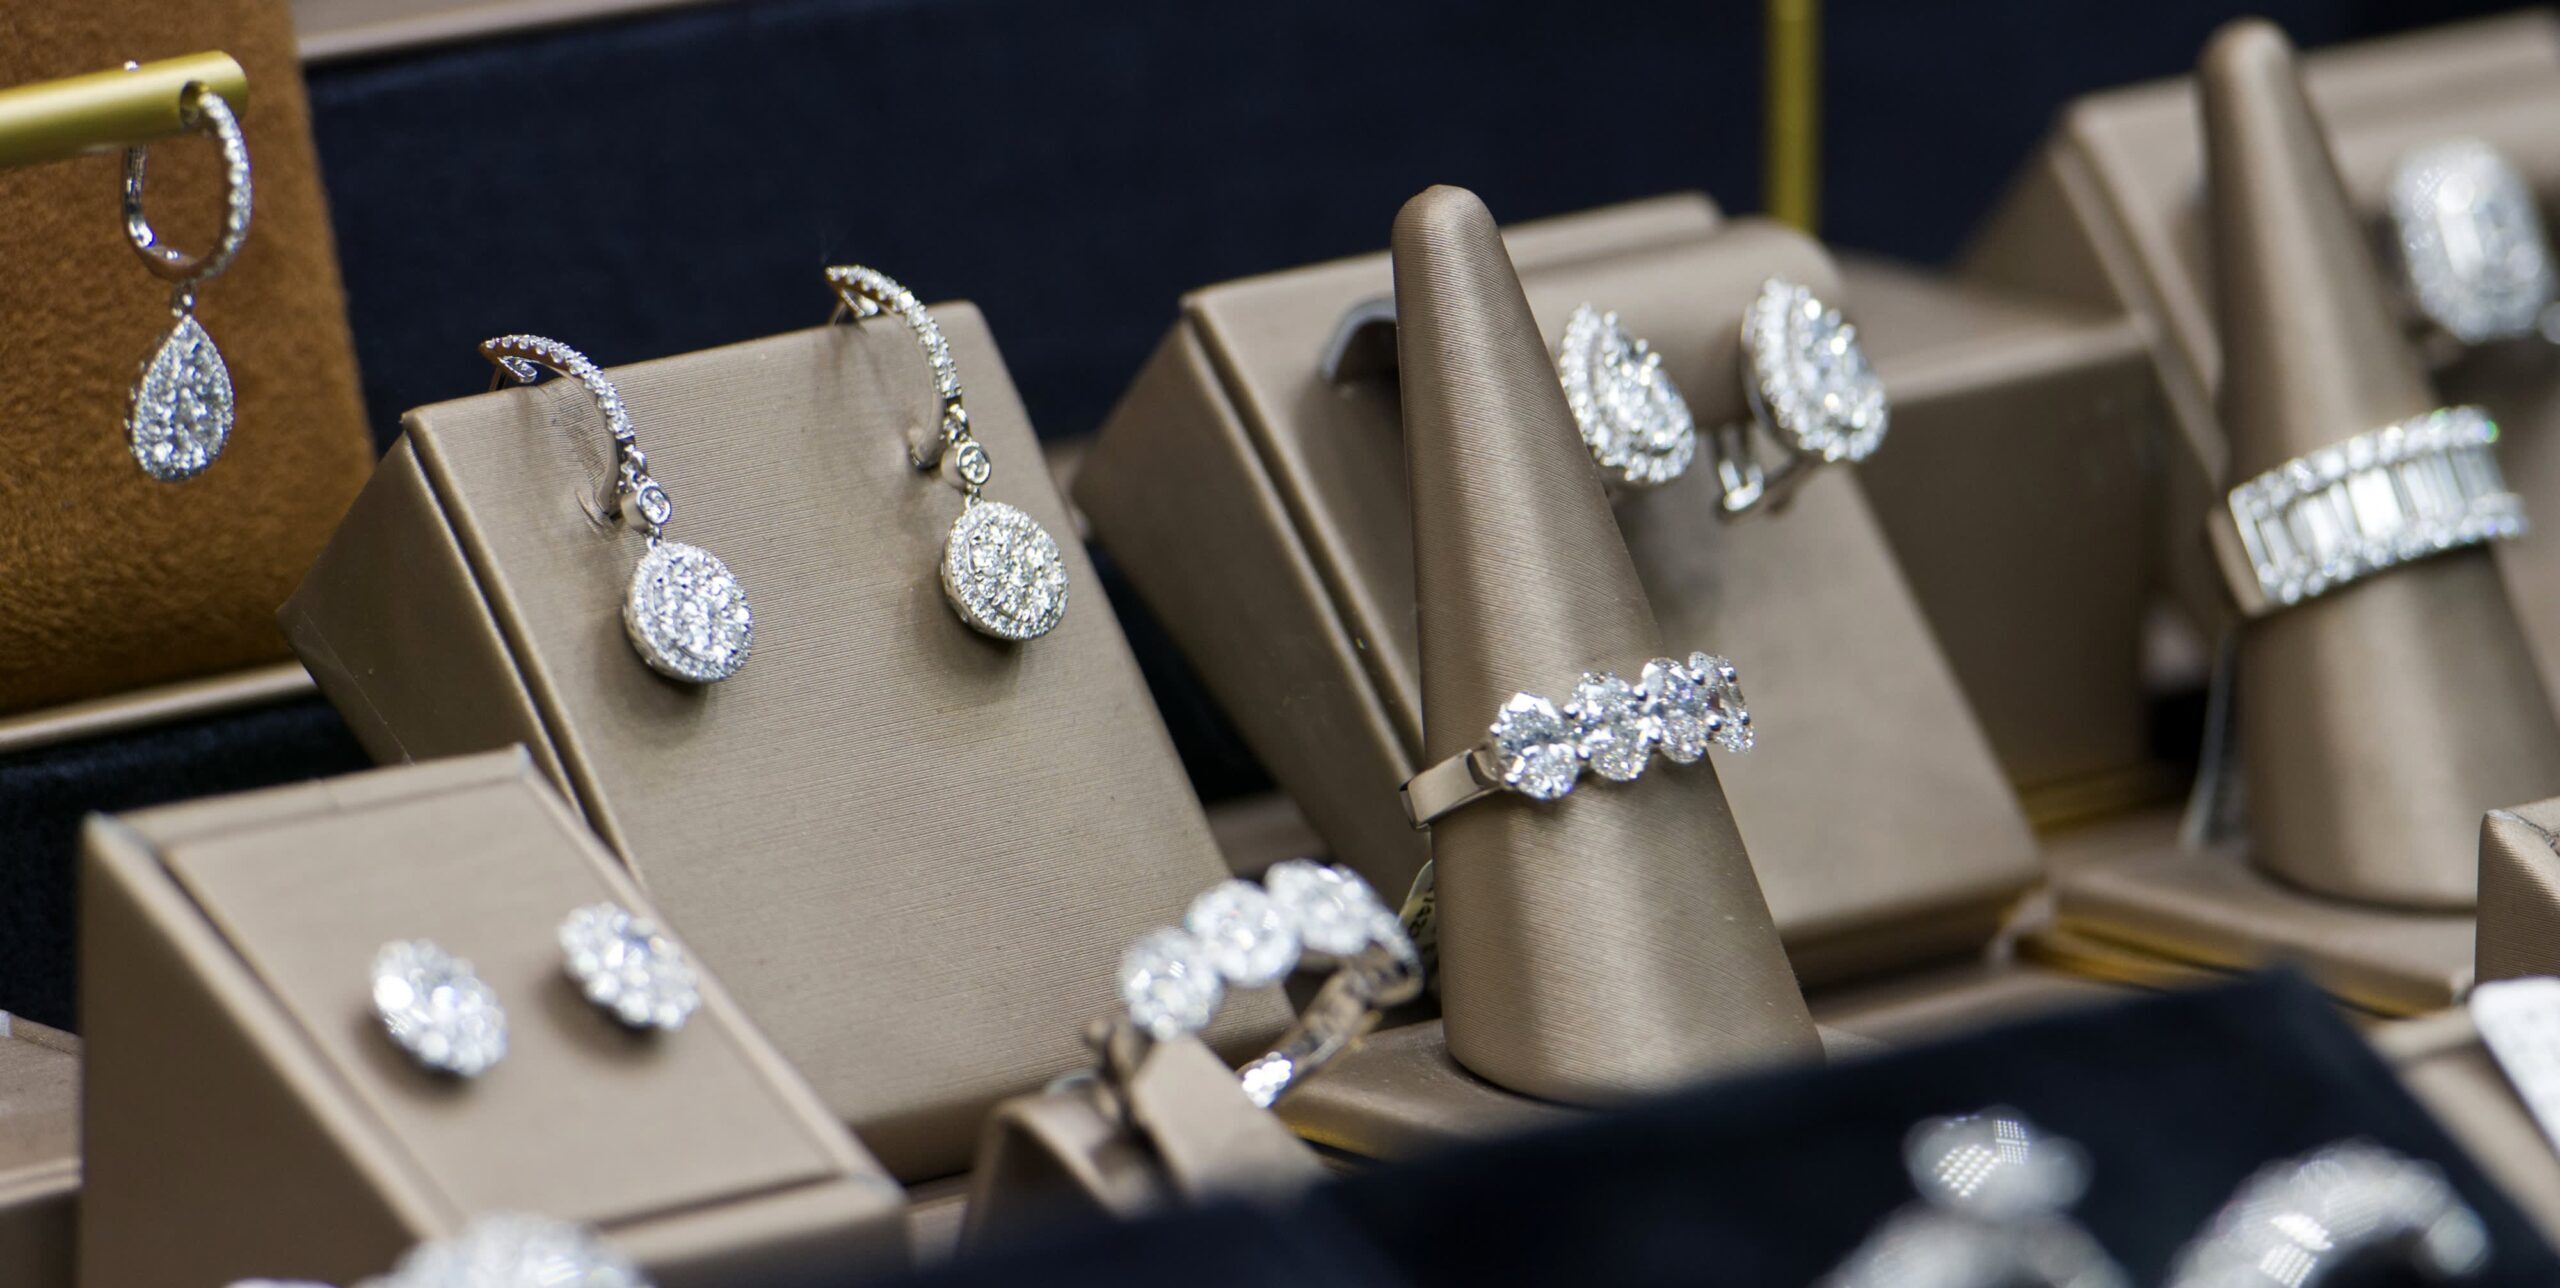 Canada introduces sanctions against Russian diamonds